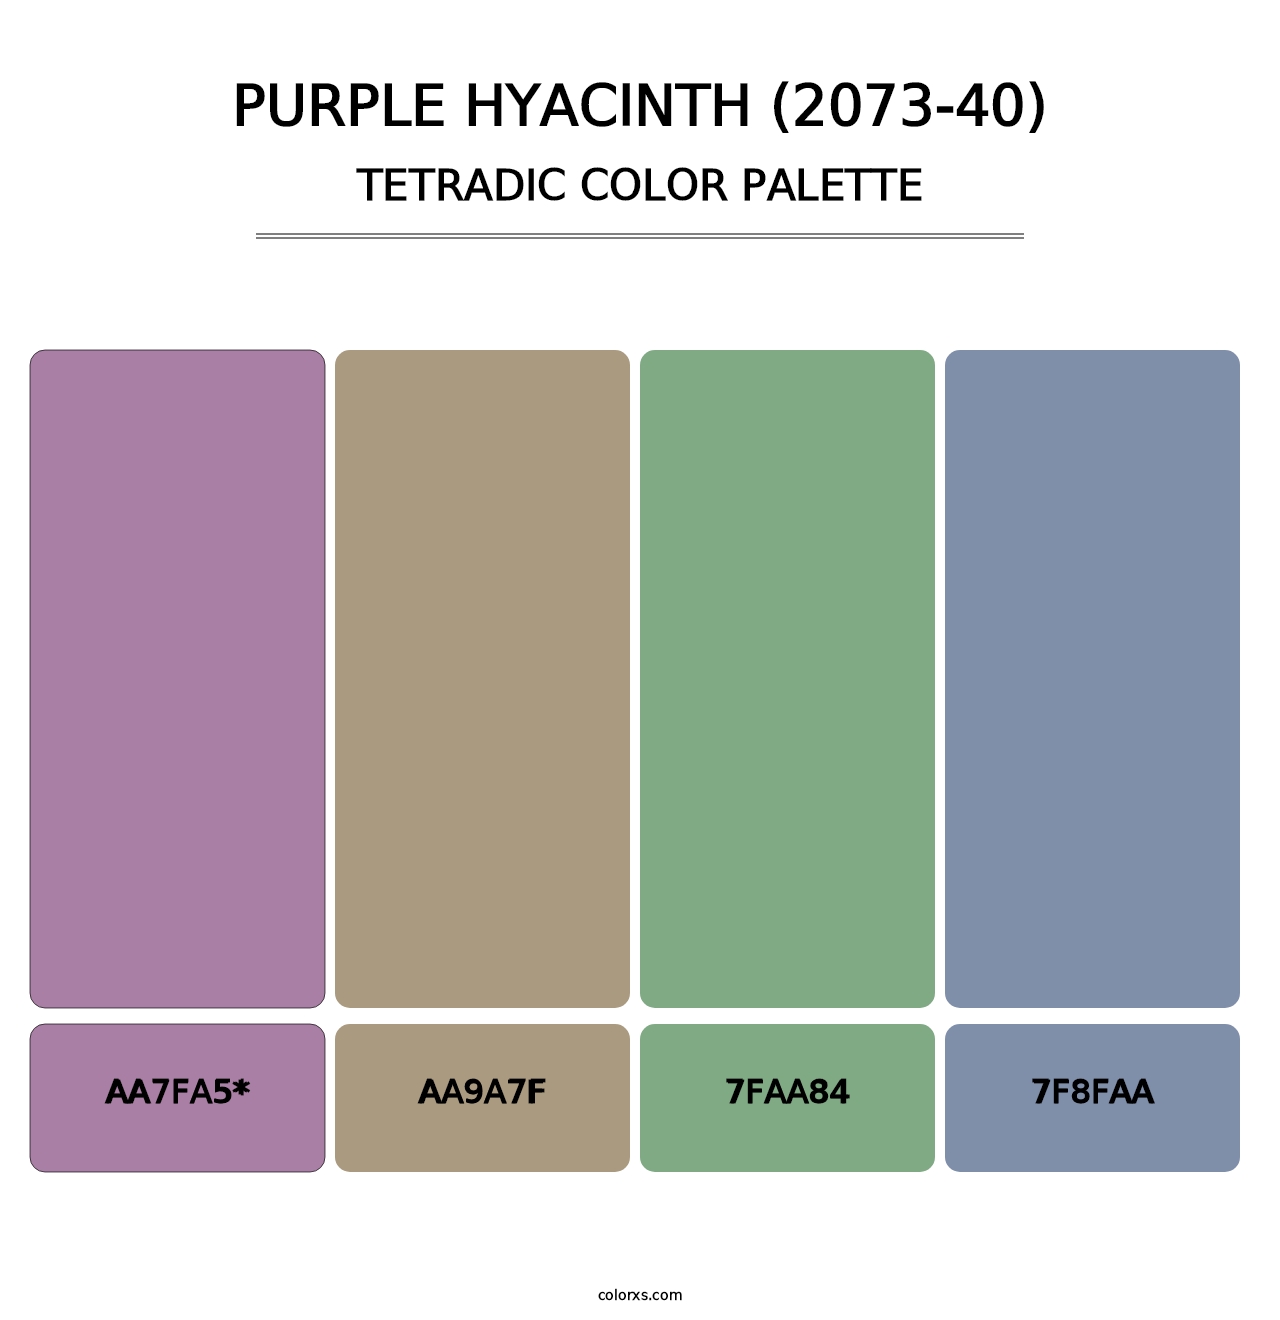 Purple Hyacinth (2073-40) - Tetradic Color Palette